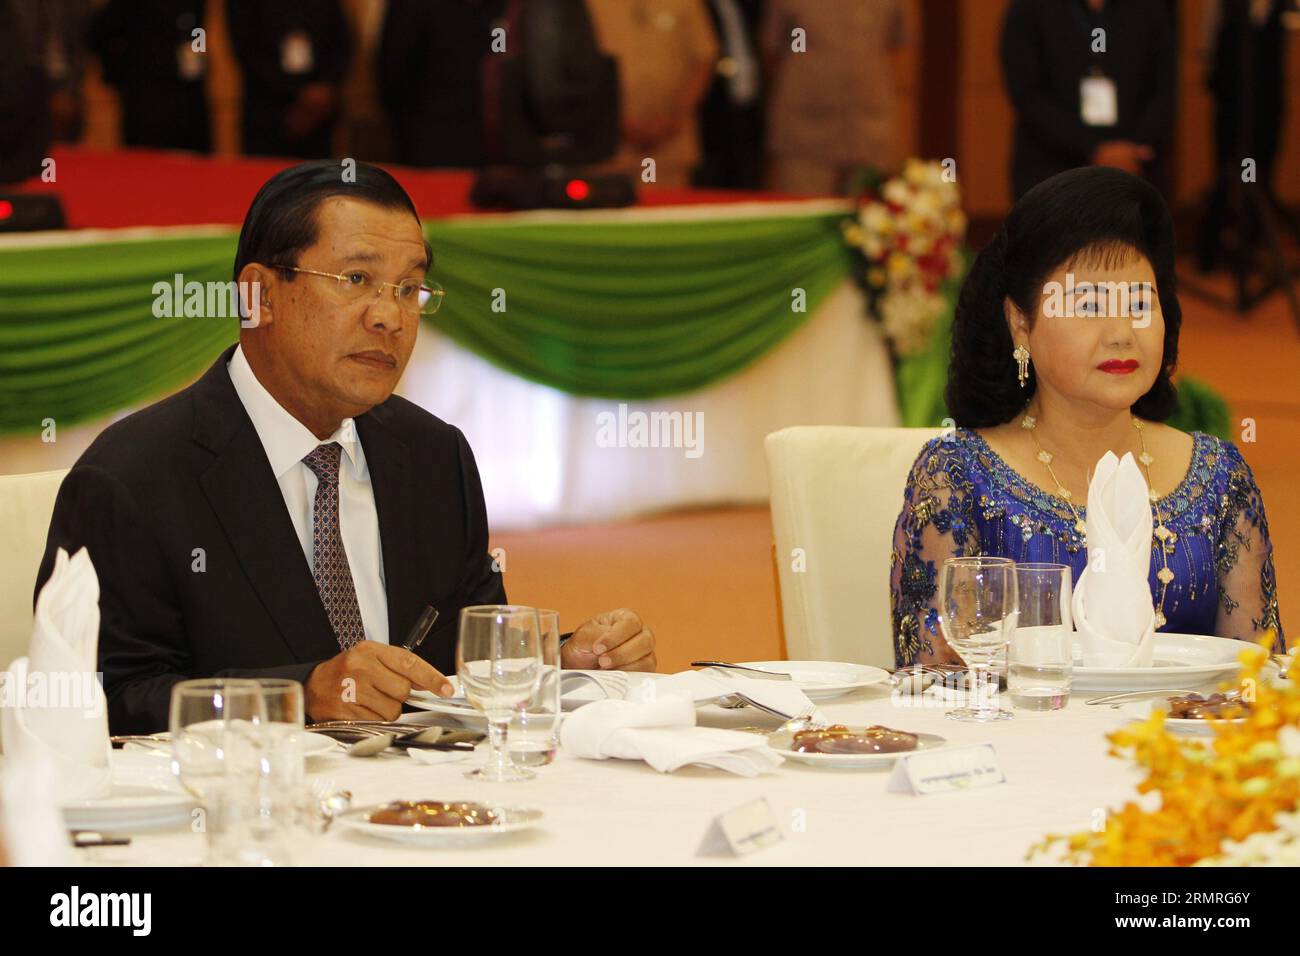 (140718) -- PHNOM PENH, 18 juillet 2014 (Xinhua) -- le Premier ministre cambodgien Hun Sen (à gauche) et son épouse Bun Rany assistent à un dîner Ramadan Iftar à Phnom Penh, Cambodge, le 18 juillet 2014. Vendredi soir, le Premier ministre cambodgien Hun Sen a eu un dîner iftar avec environ 1 200 musulmans cambodgiens. (Xinhua/Sovannara)(zhf) CAMBODGE-PHNOM PENH-RAMADAN-PM-IFTAR DÎNER PUBLICATIONxNOTxINxCHN Banque D'Images